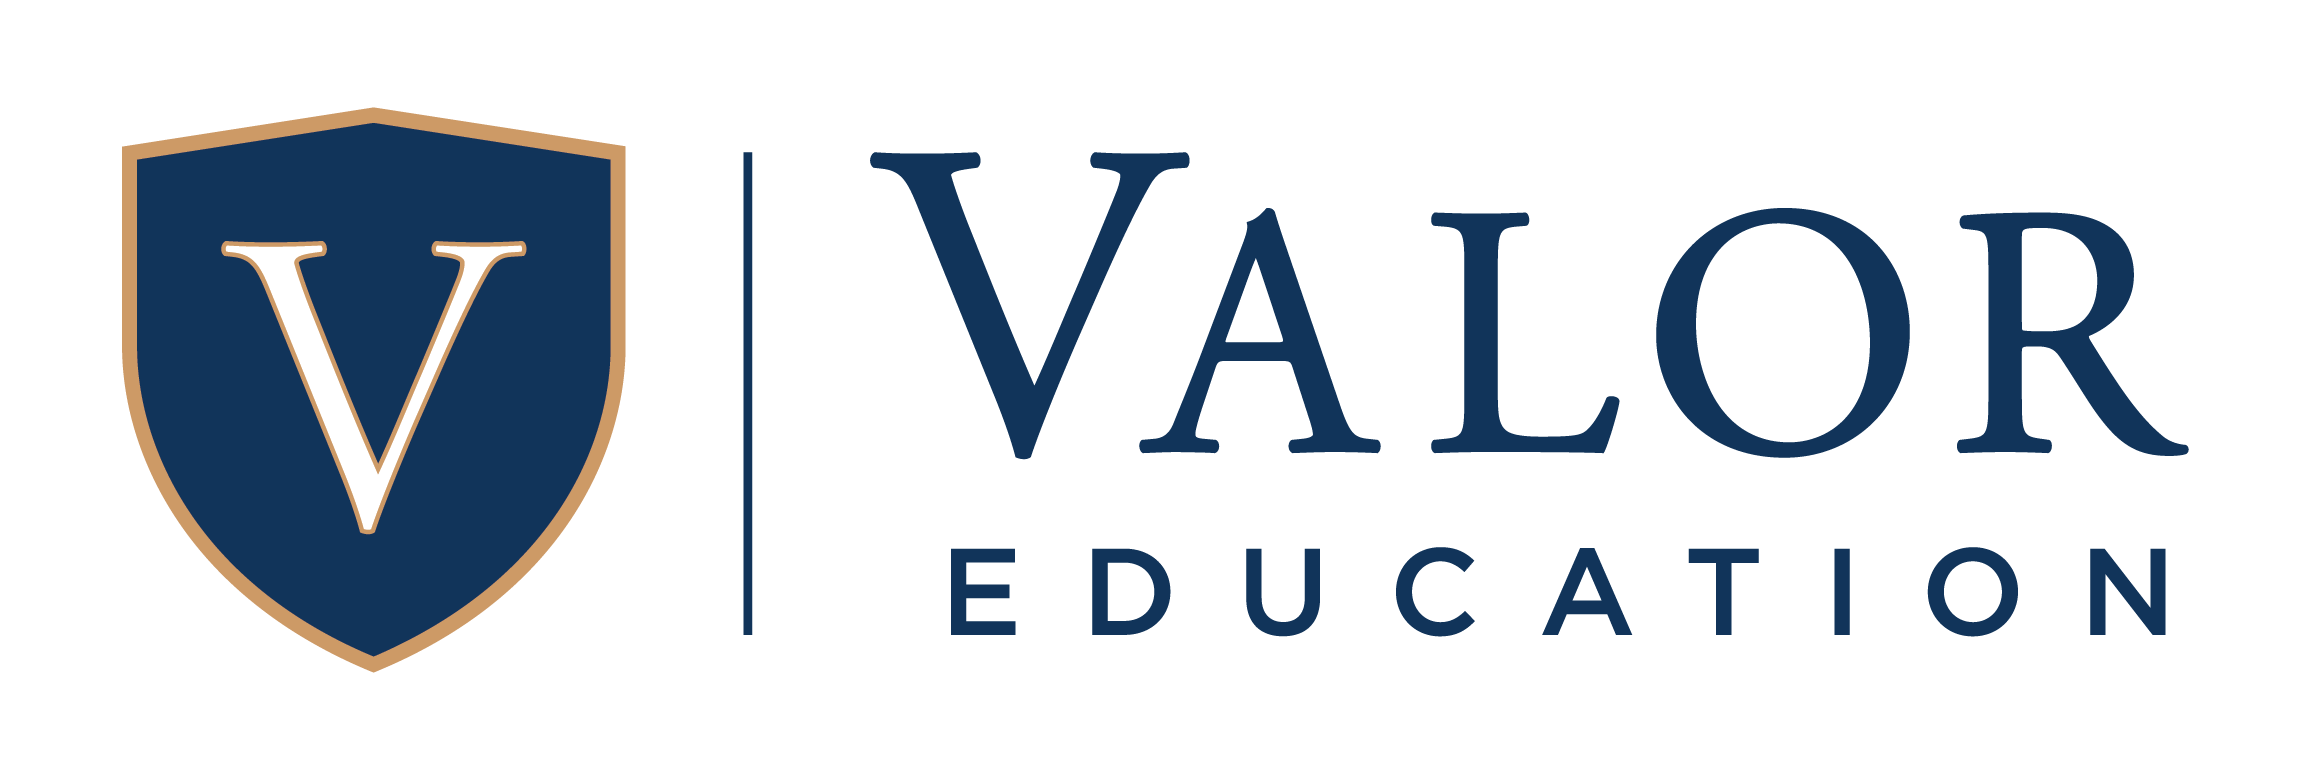 Valor Education logo